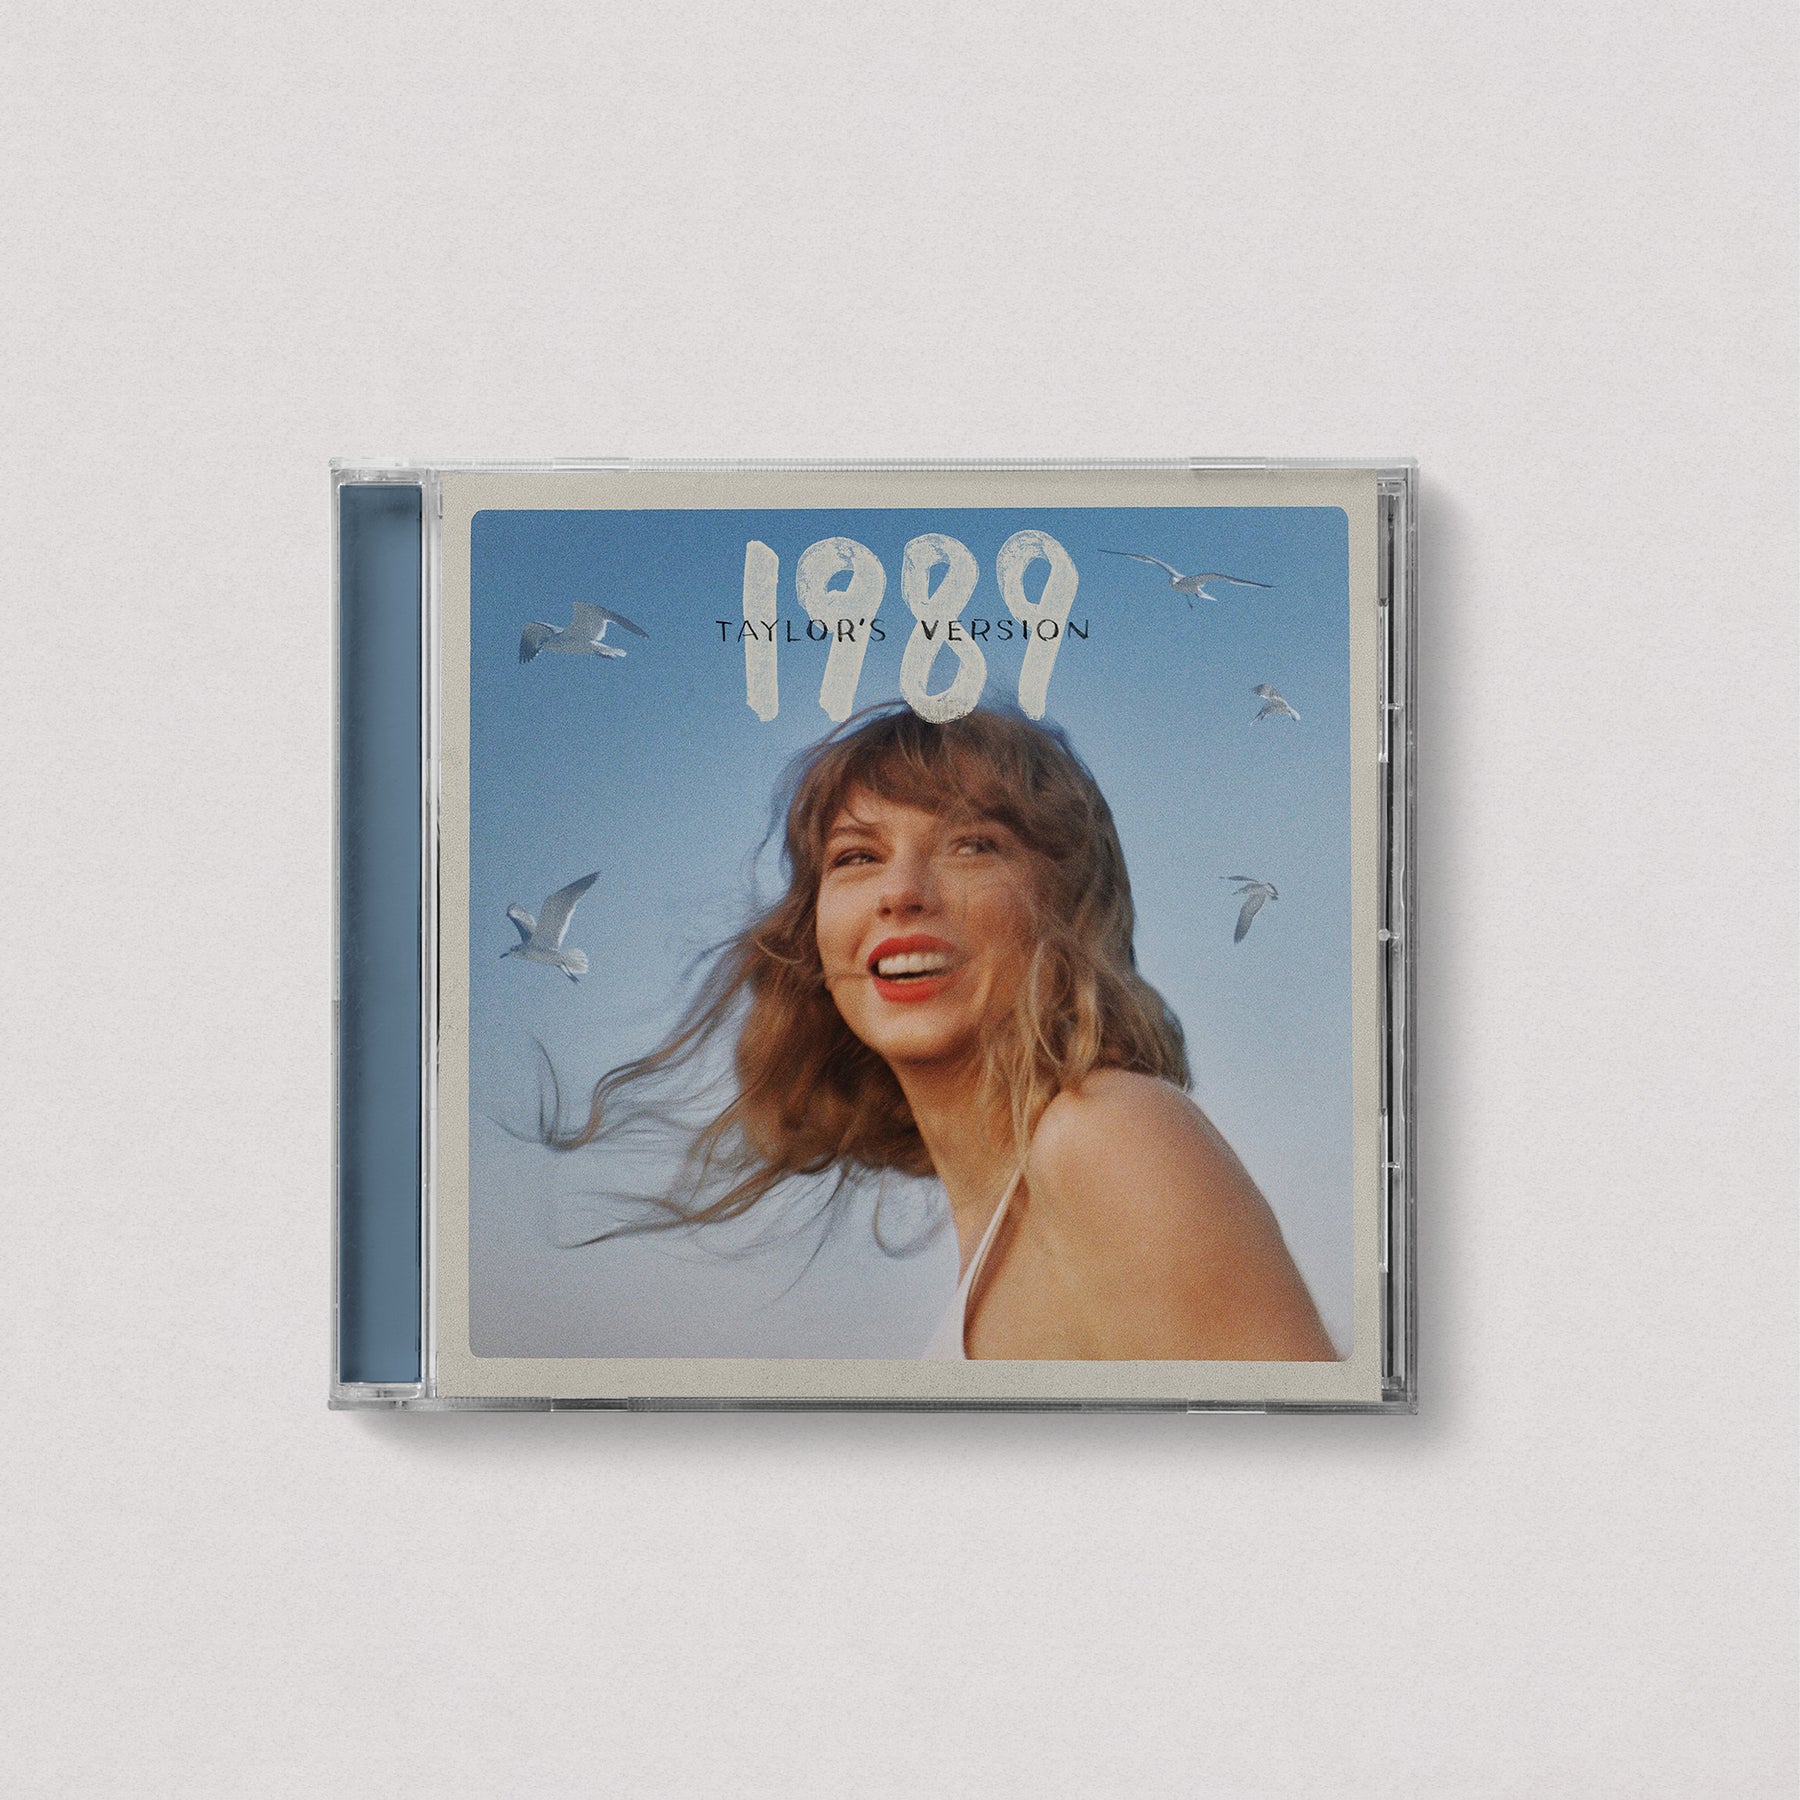 Taylor Swift - 1989 "Taylor's Version" (Standard, CD)